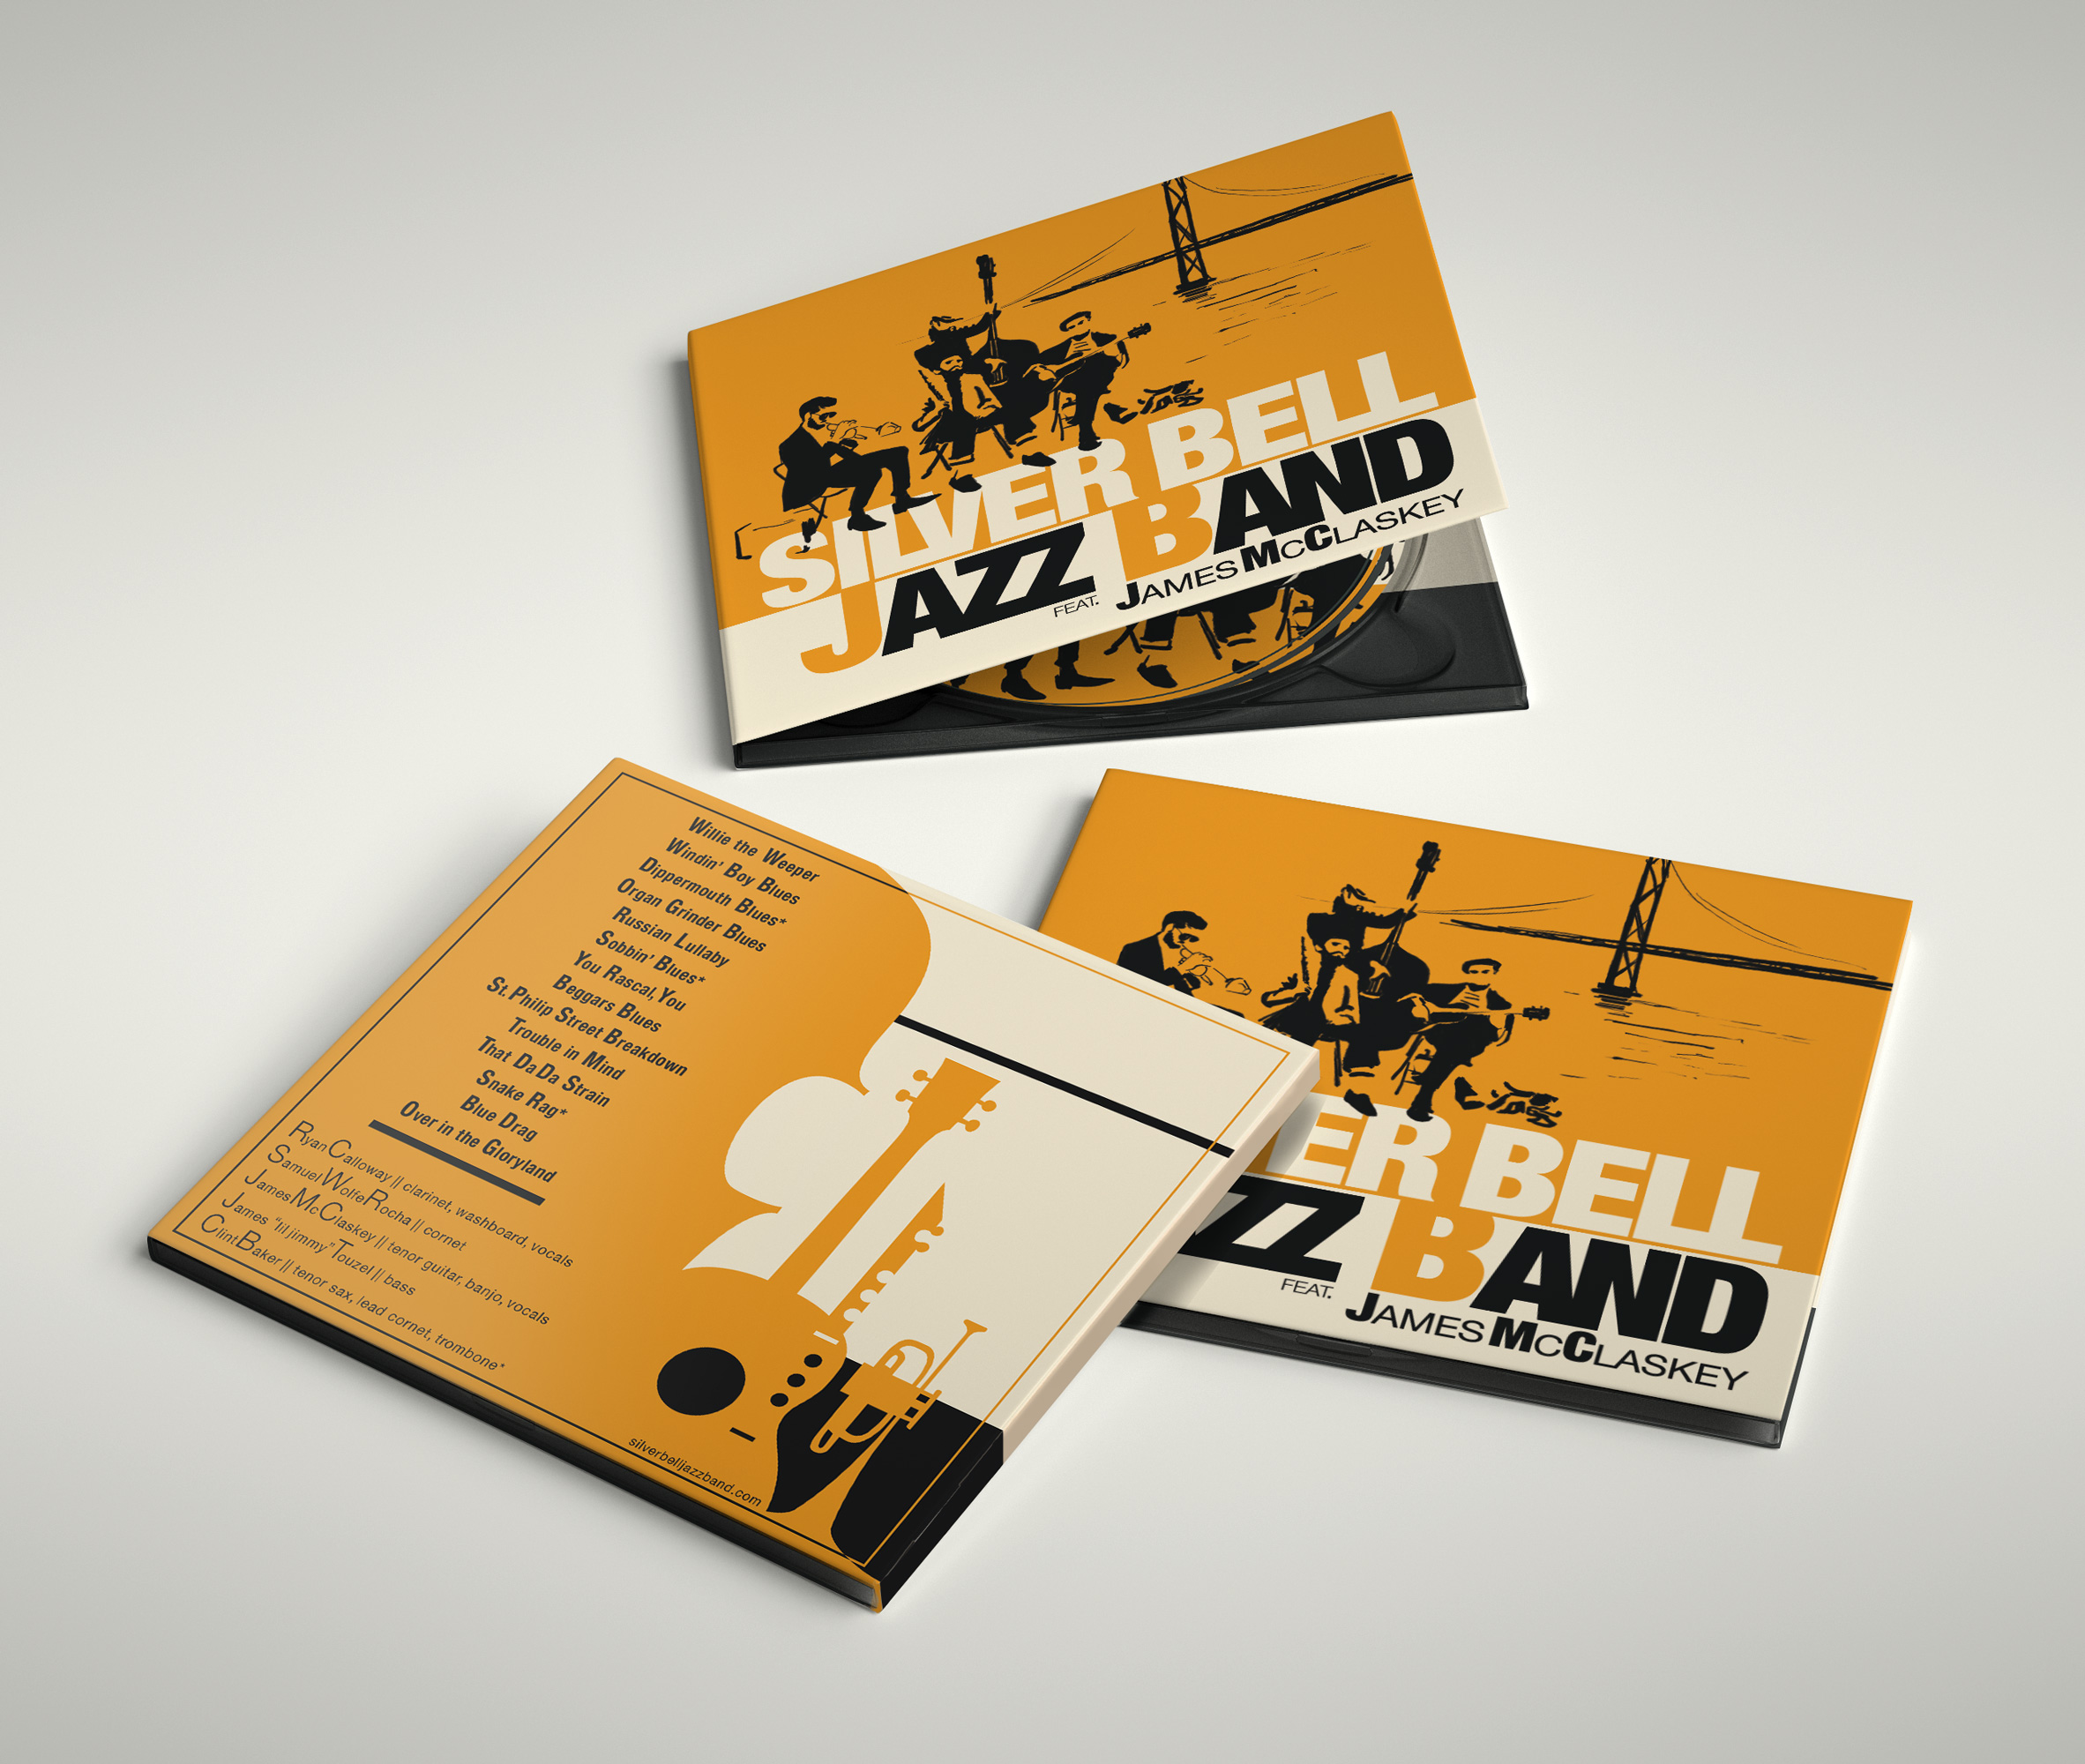 Silver Bell Jazz Band Final ALbum Design